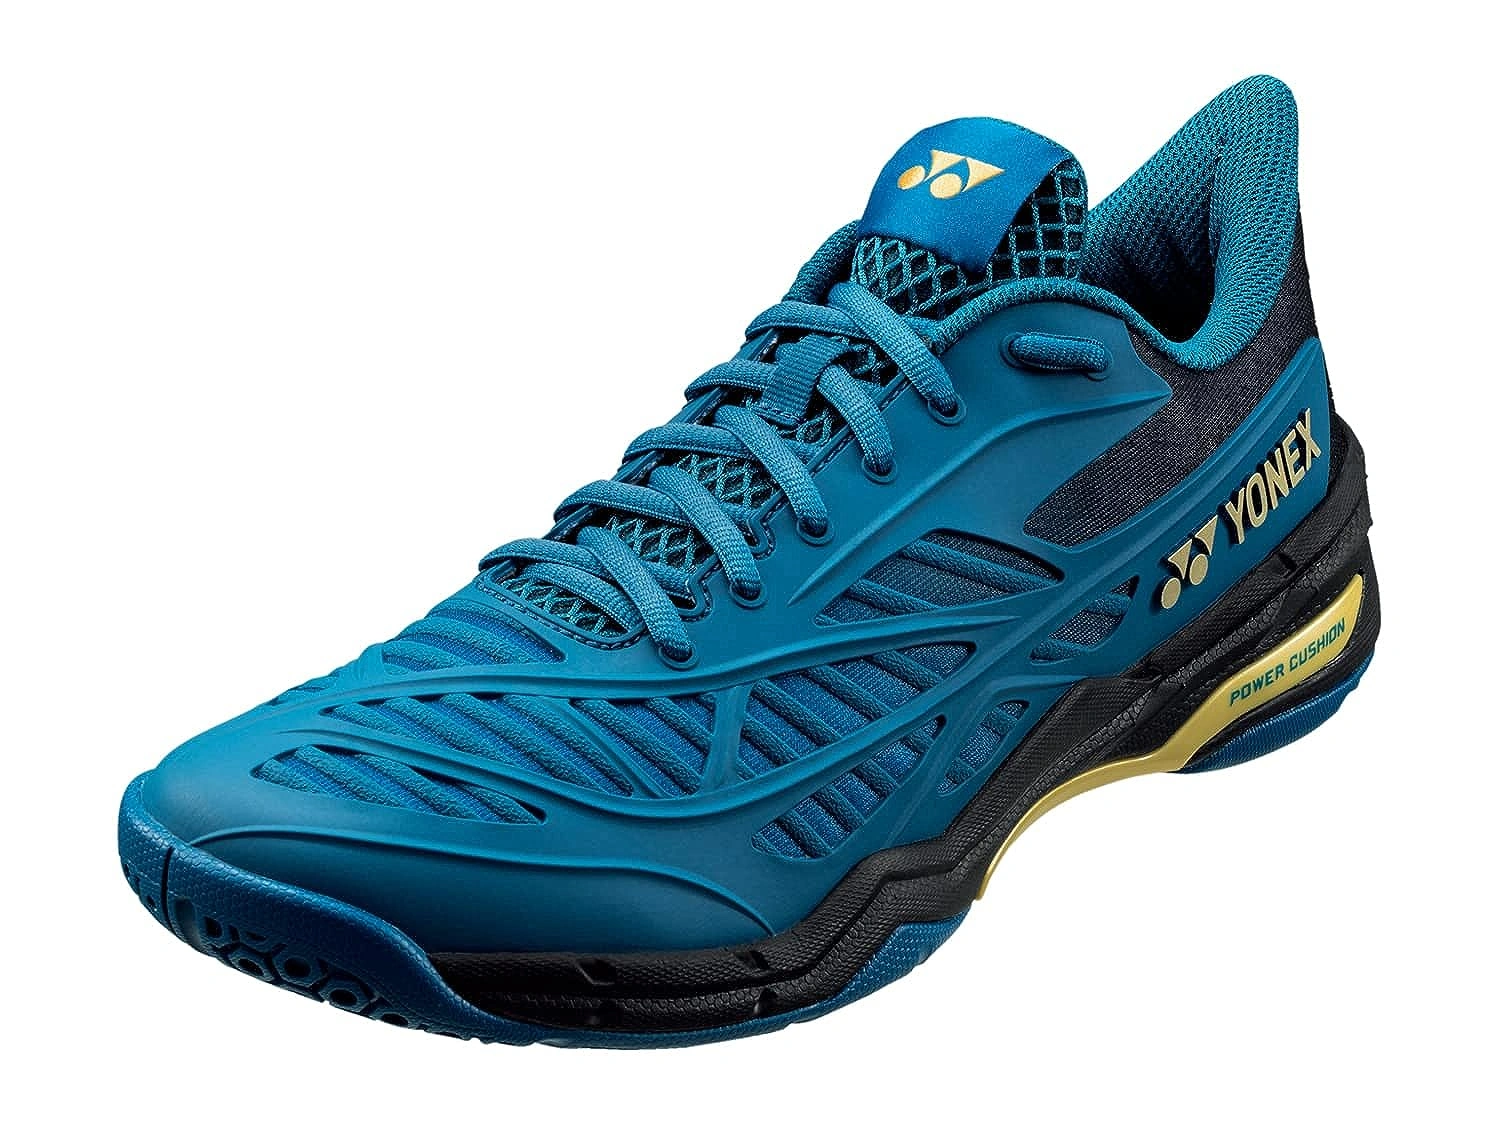 Yonex Power Cushion Cascade Drive Badminton Shoes-8-TEAL BLUE-3